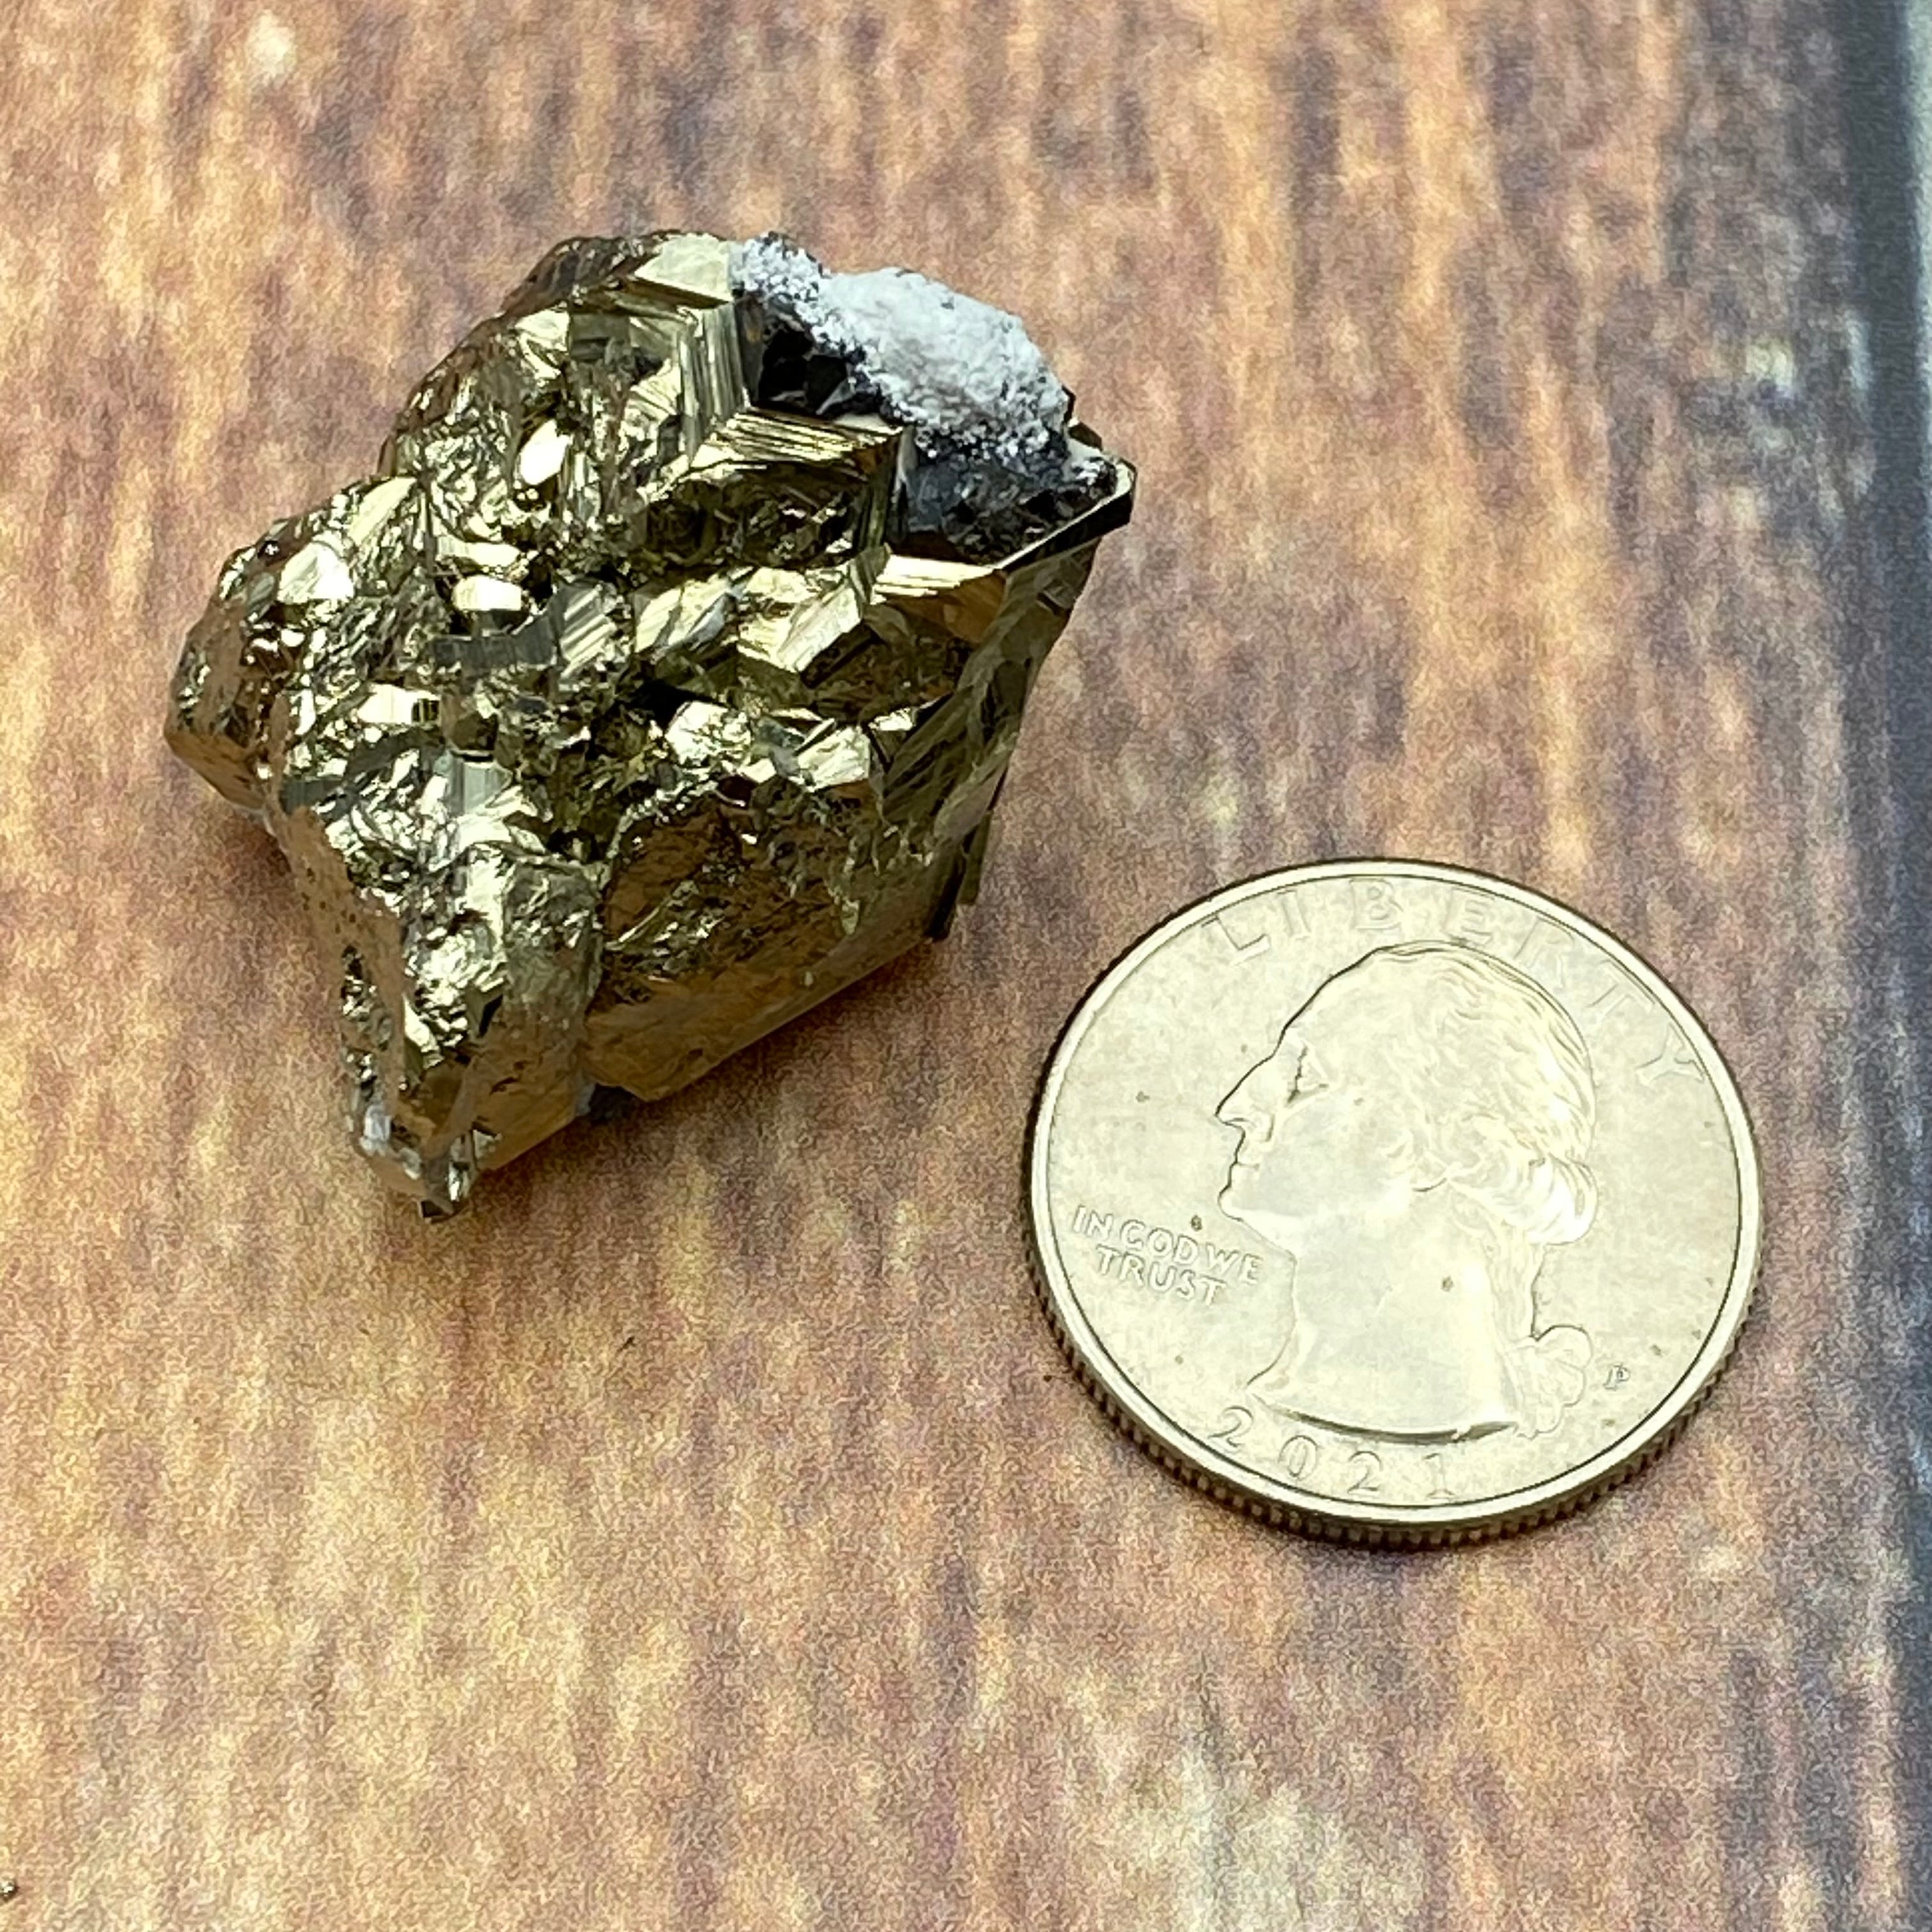 Peruvian Pyrite Crystal - 113